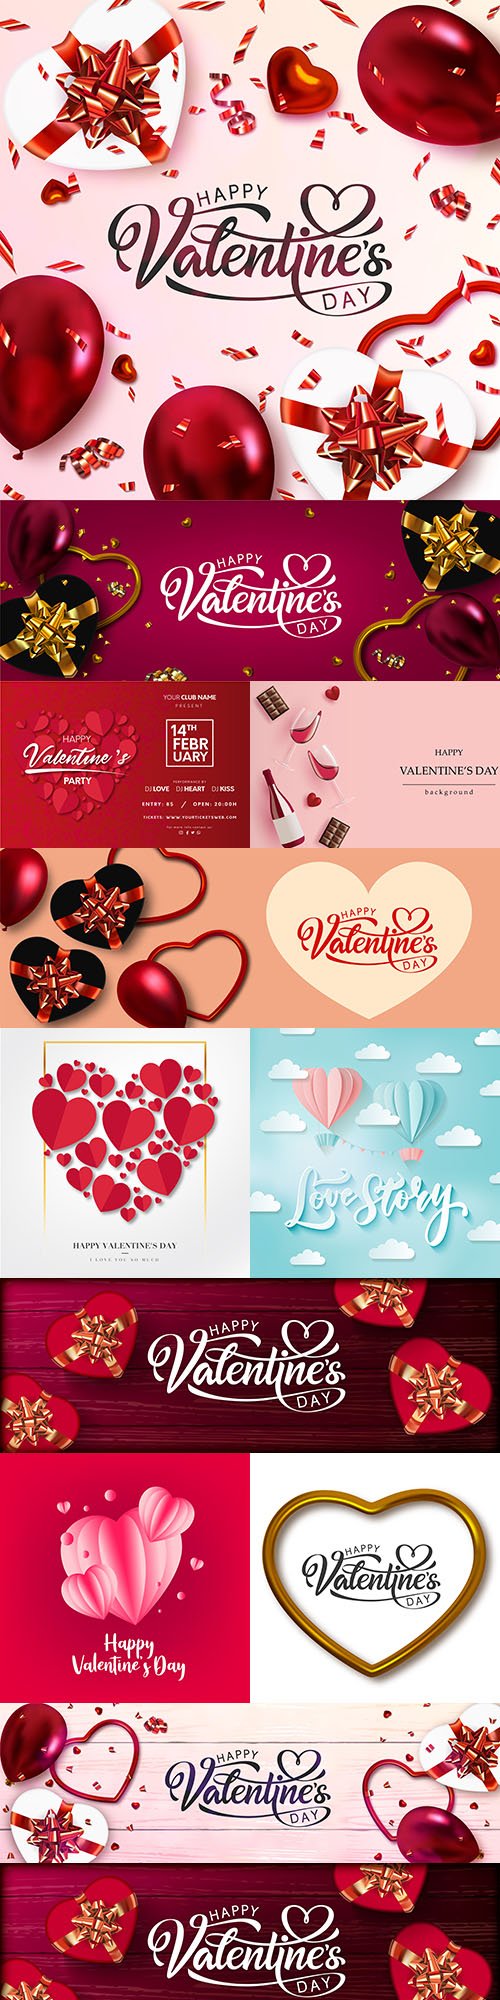 Valentine's Day romantic elements decorative illustrations 16